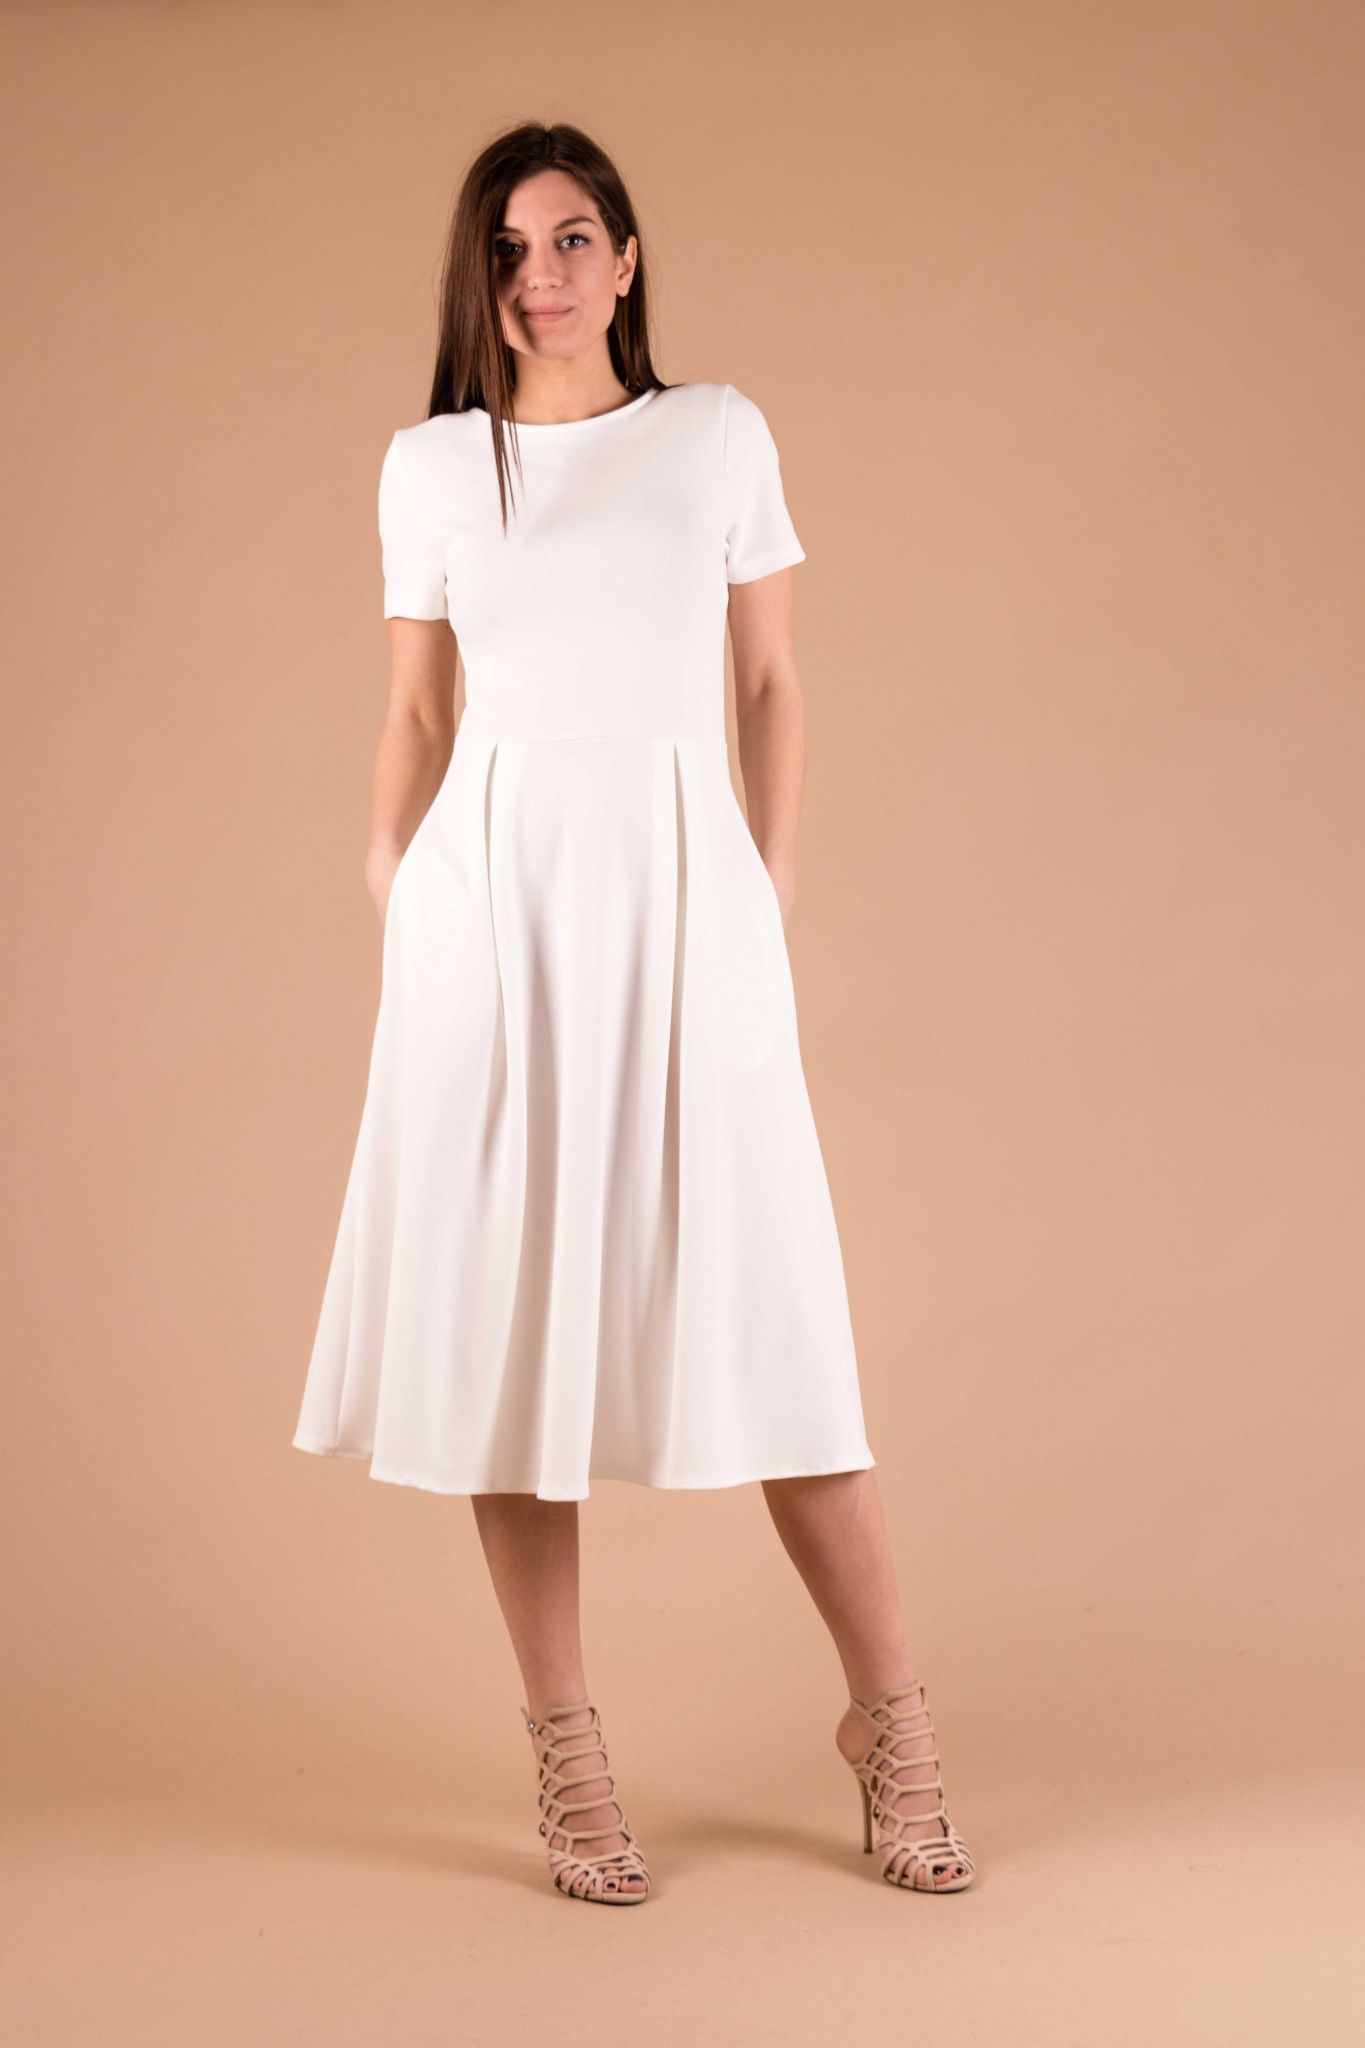 White Flowing Short Dress 2021